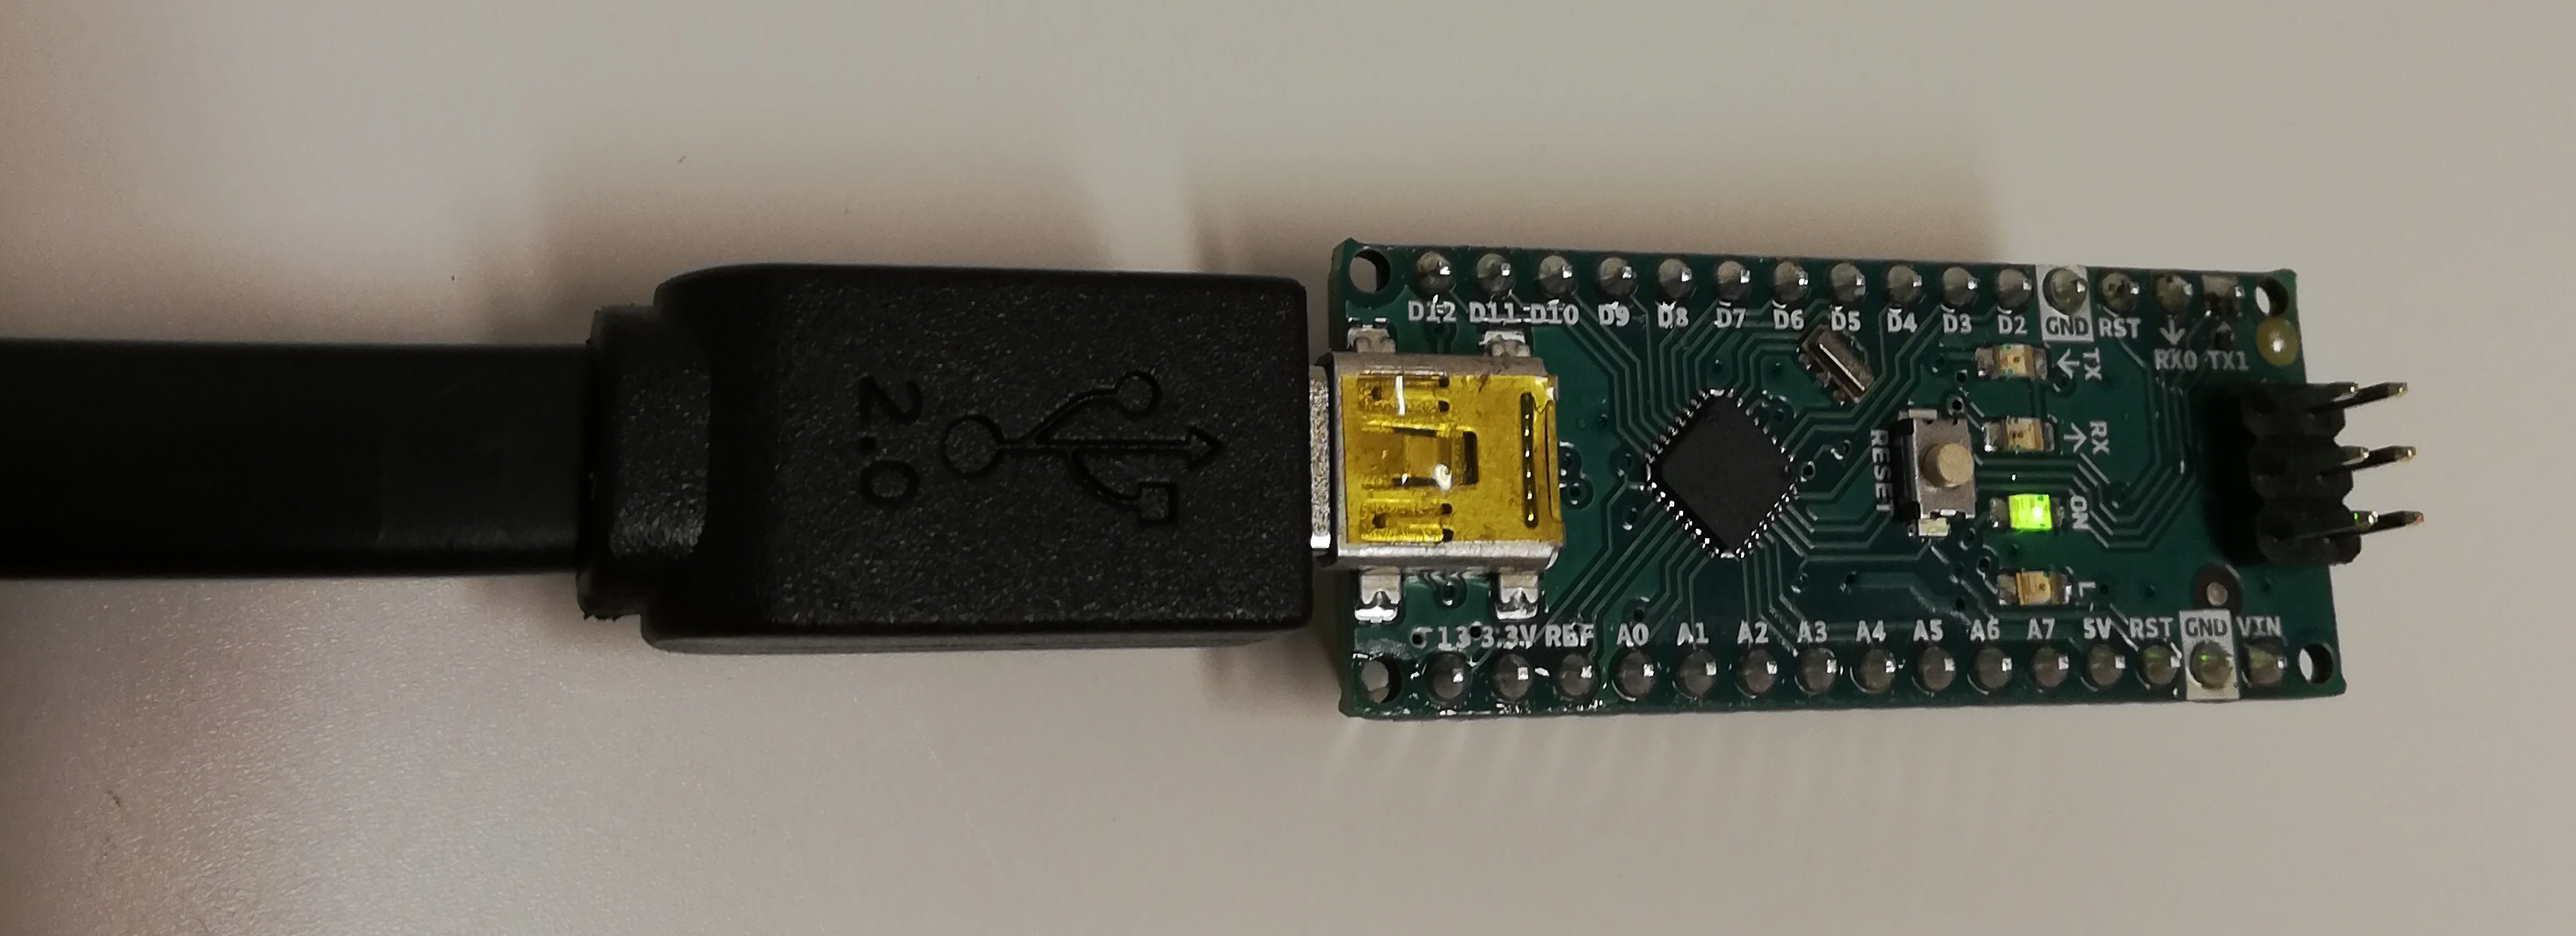 connect Arduino nano to your mini USB cable